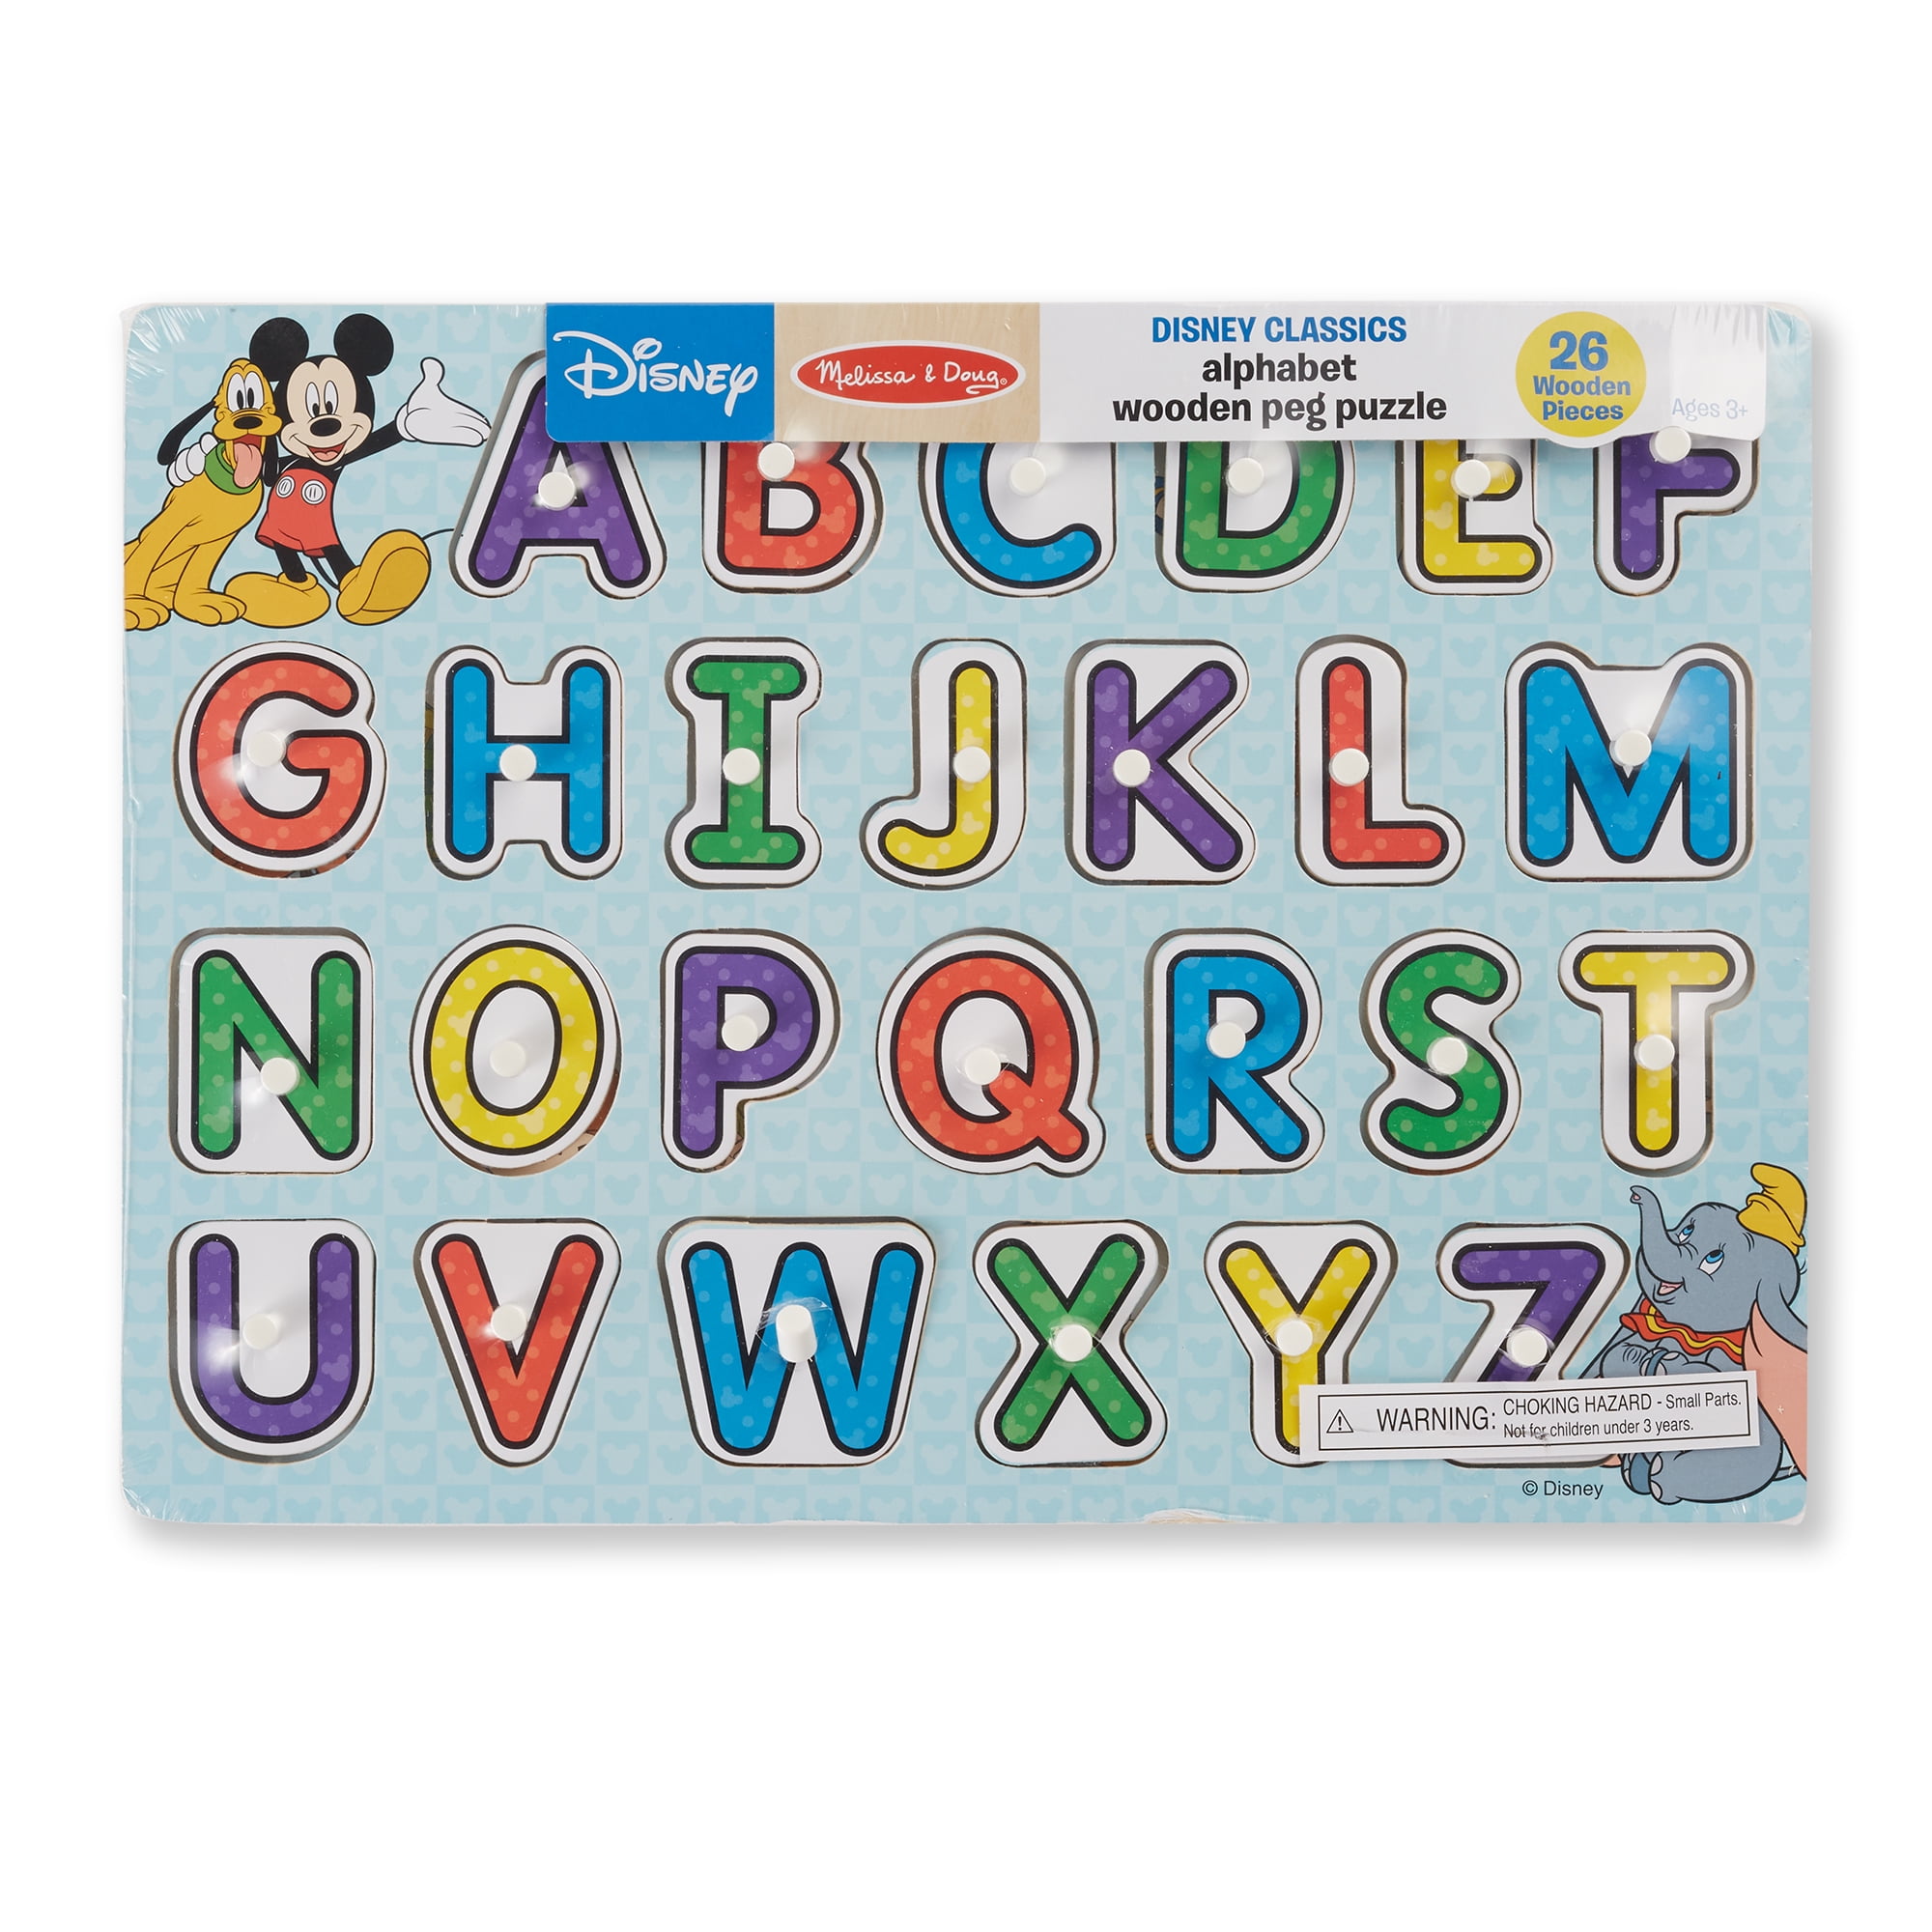 Melissa Doug Disney Classics Wooden Alphabet Letters 26 Pieces Walmart Com